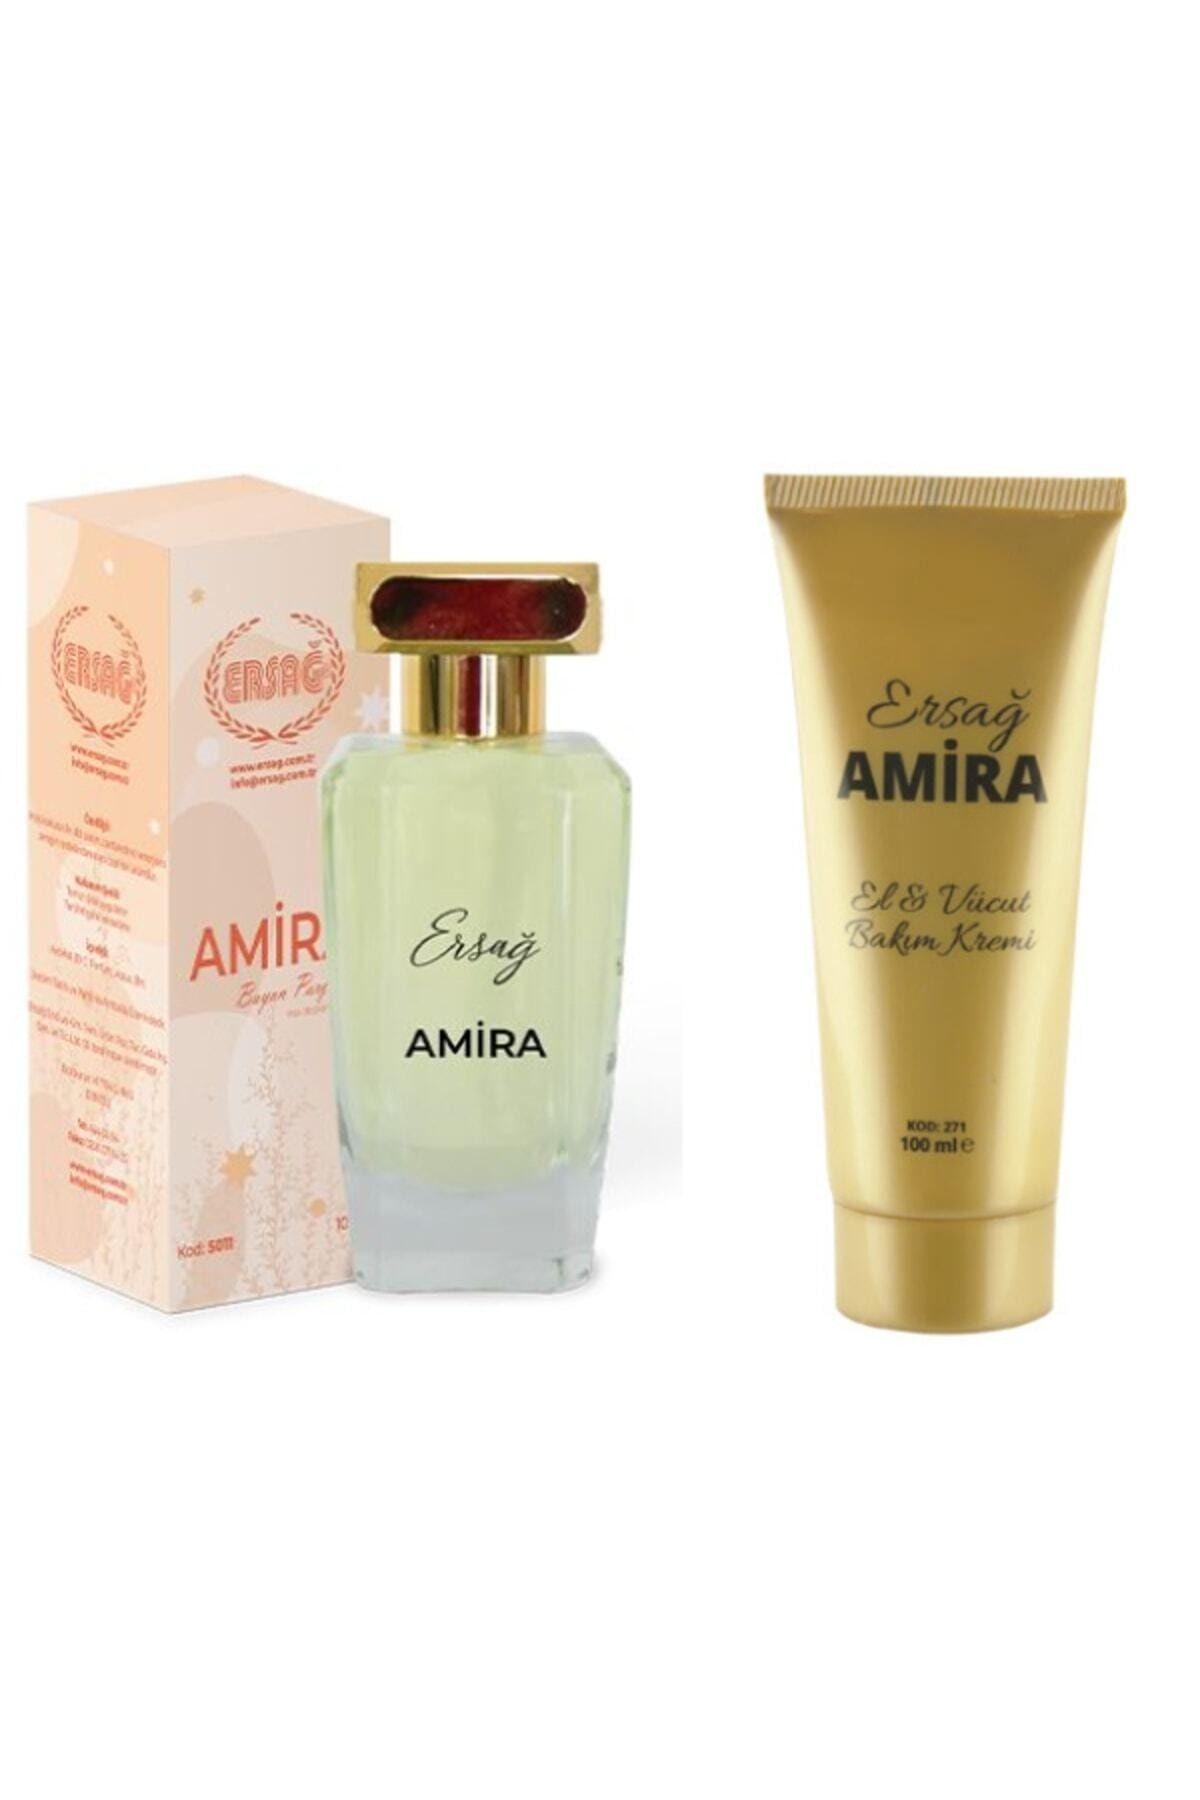 Ersağ Amira Edp Kadın Parfümü 100 Cc. & Amira El - Vücut Bakım Kremi 100 Ml